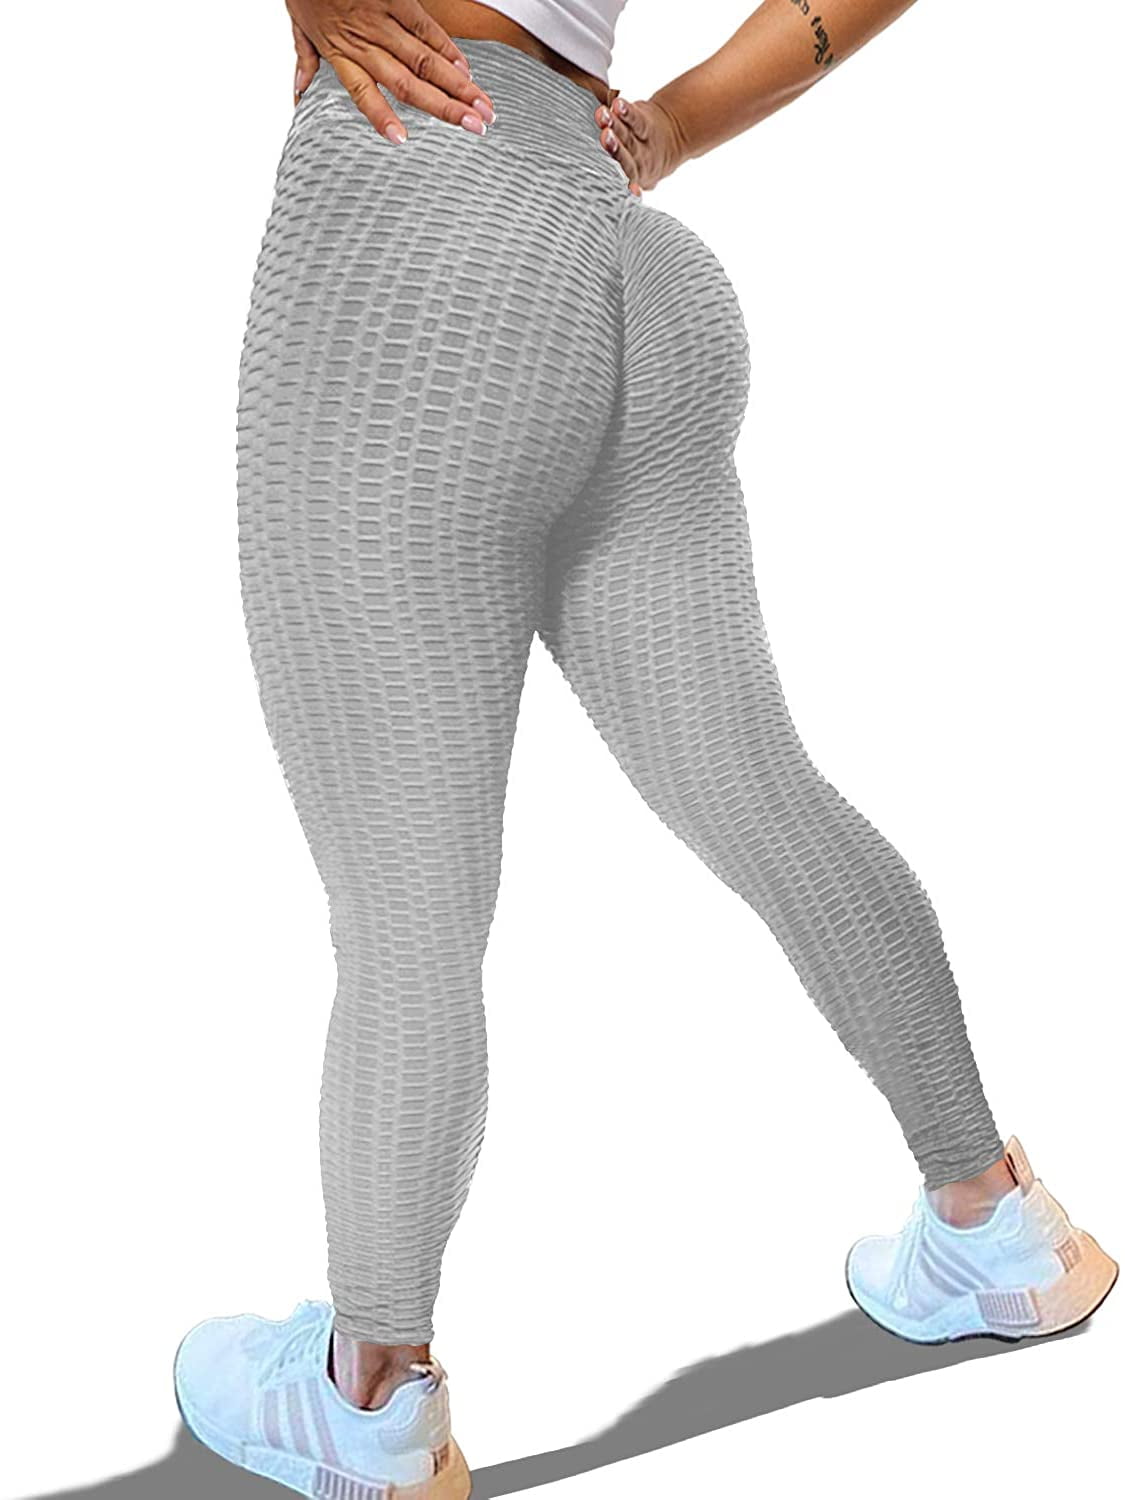 Vaslanda Women S Ruched Butt Lifting High Waist Yoga Pants Tummy Control Stretchy Workout